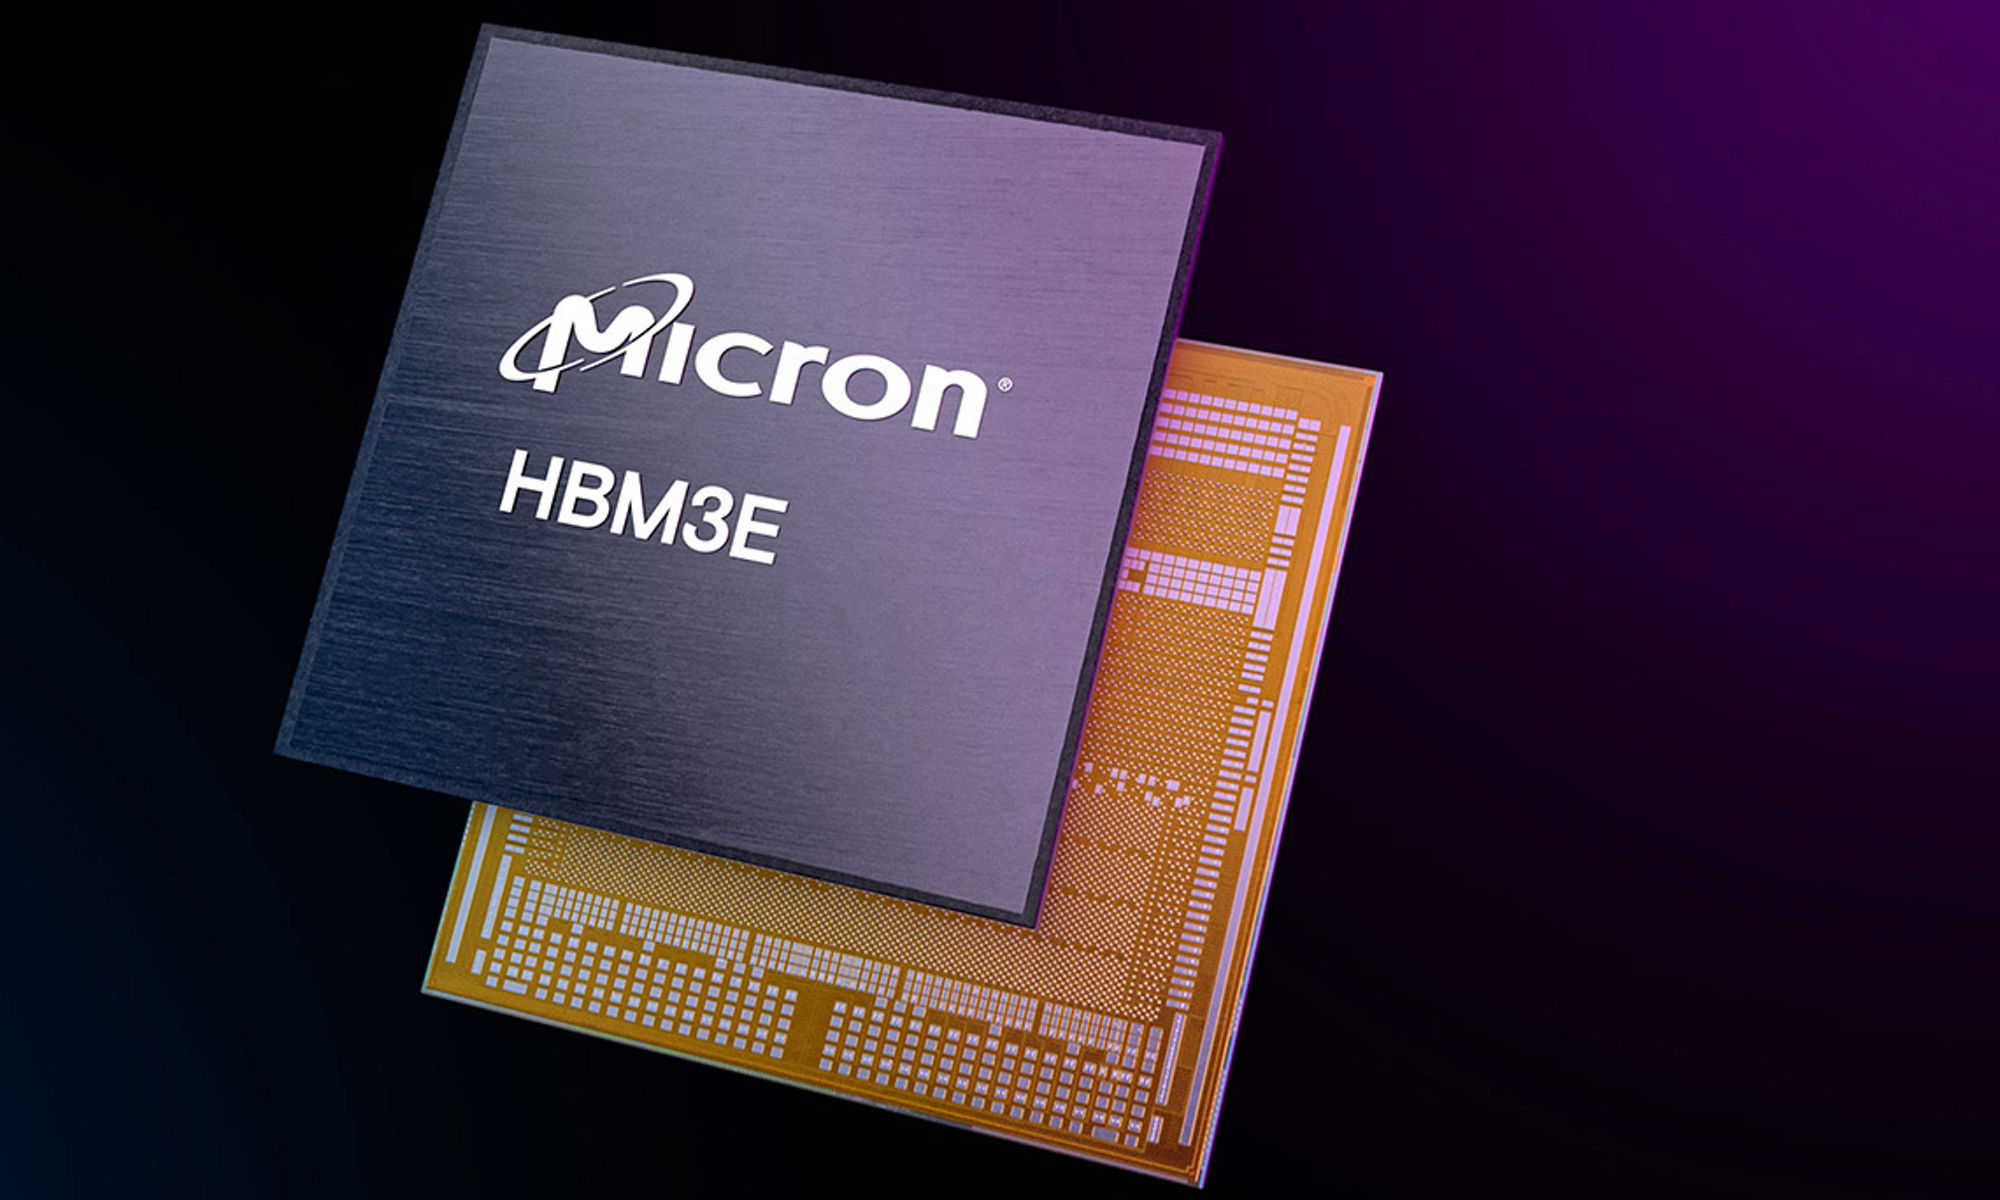 Micron HBM3E memory